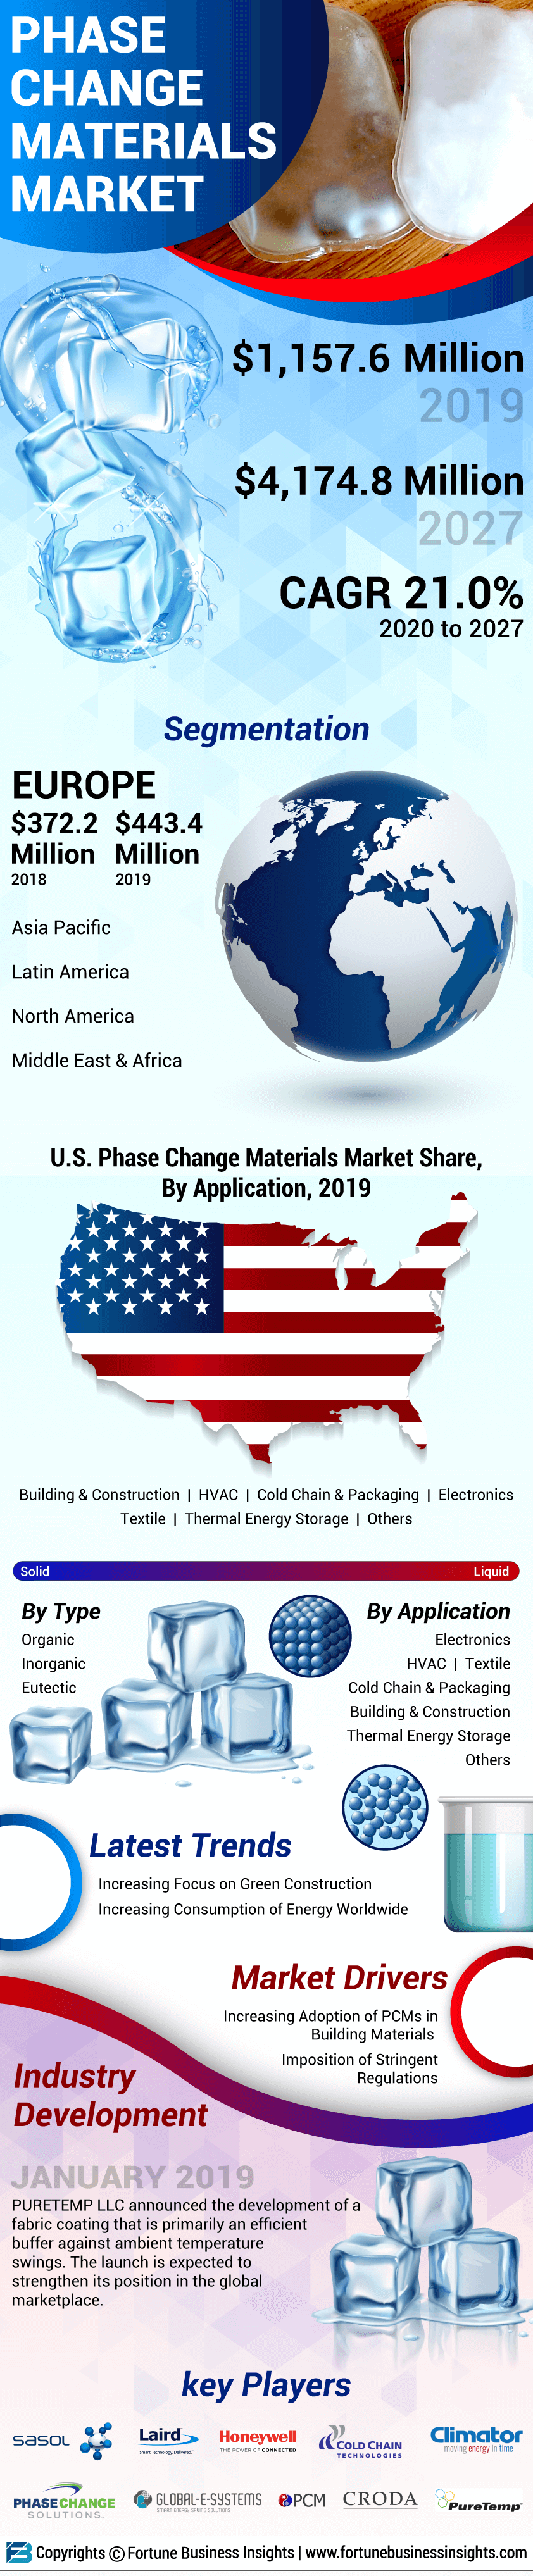 Phase Change Materials Market 